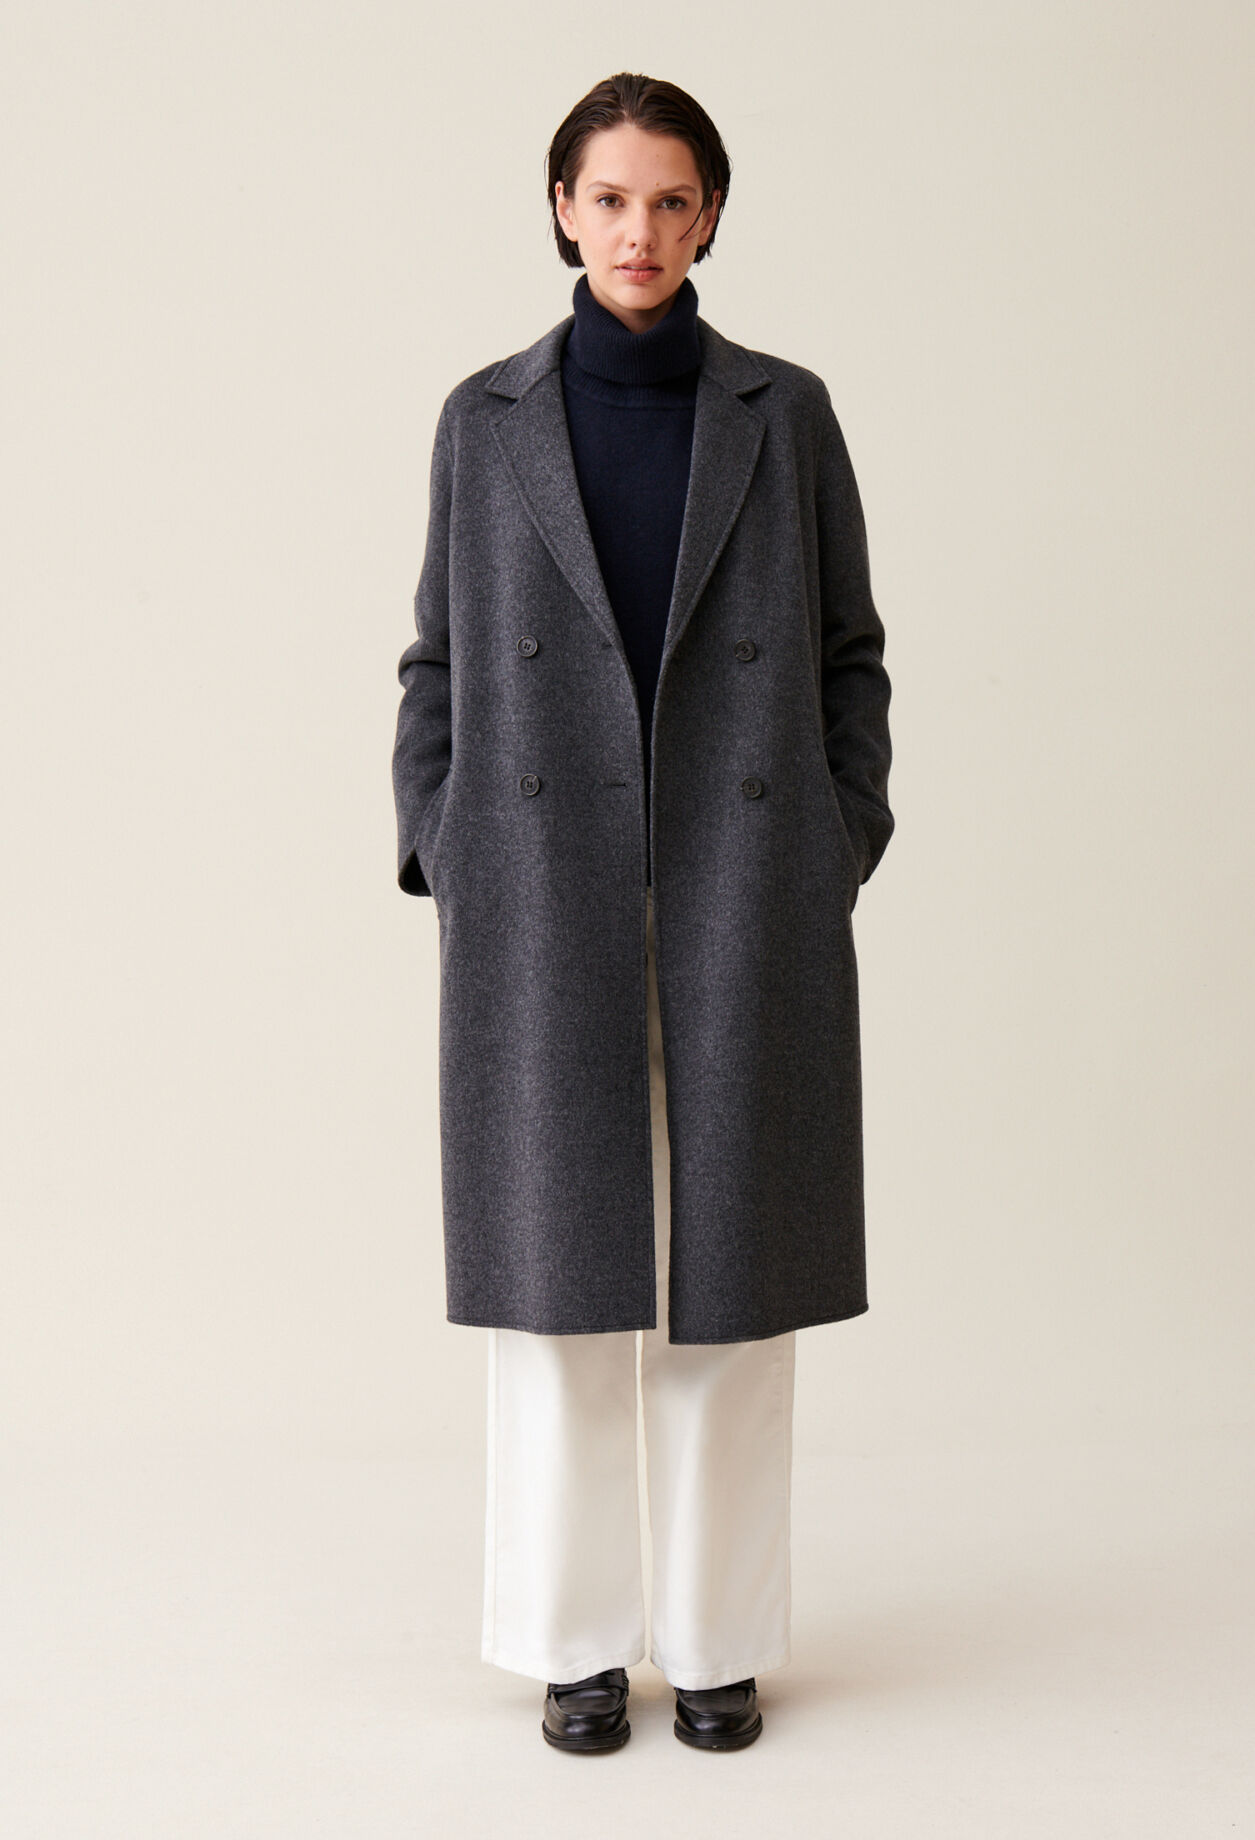 Flecked grey double-sided wool coat